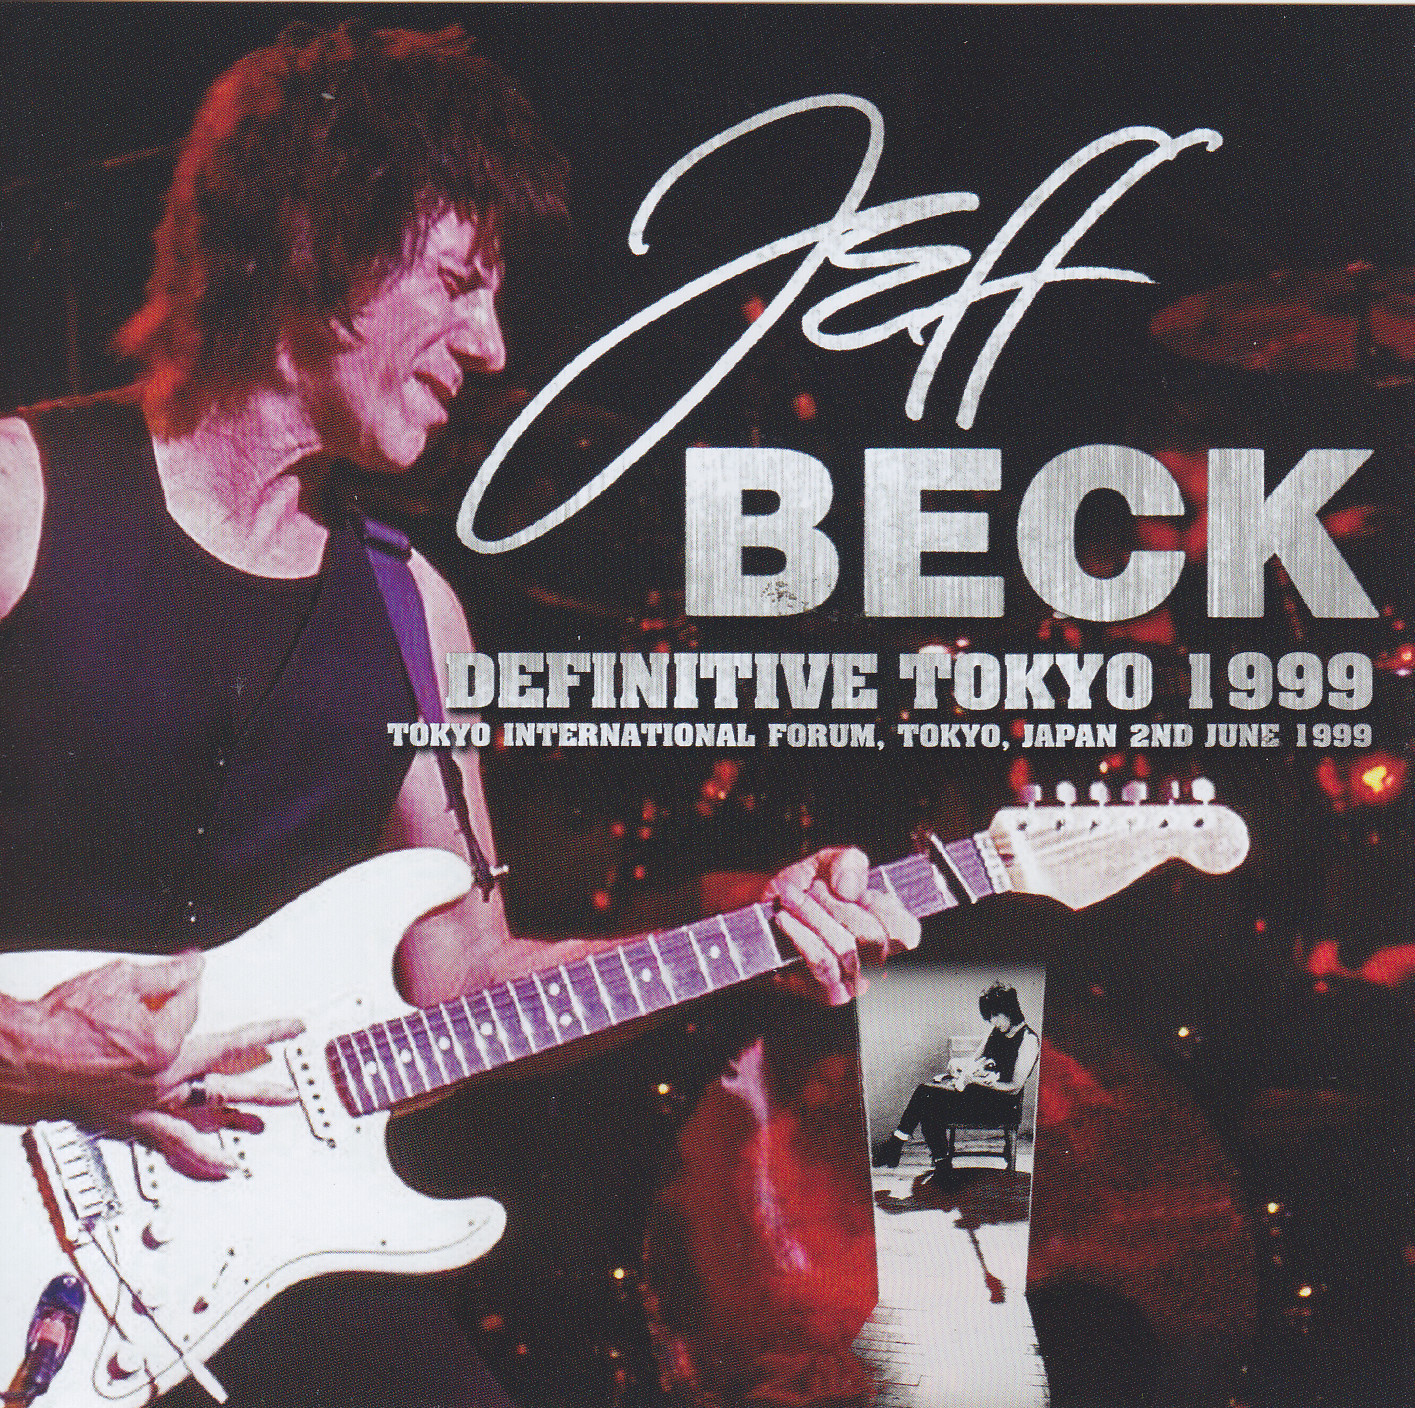 Jeff Beck / Definitive Tokyo 1999 / 2CD+1Bonus DVDR – GiGinJapan